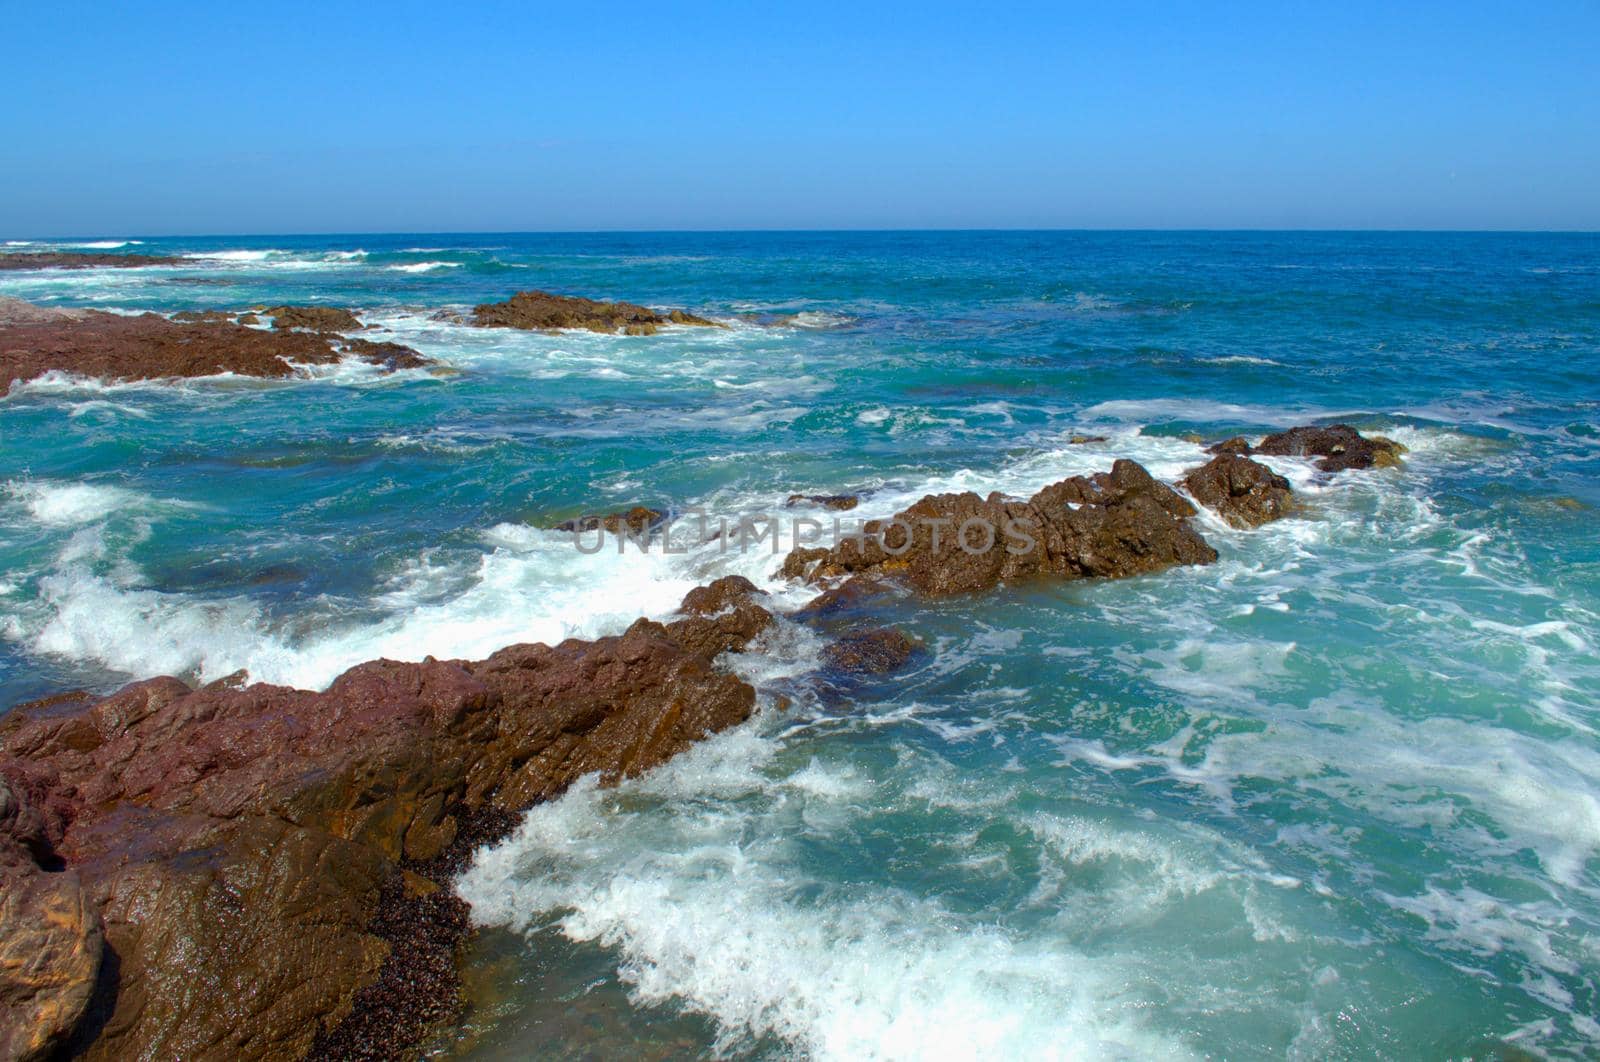 Sea waves crash against the rocks in Antofagasta, Chile.